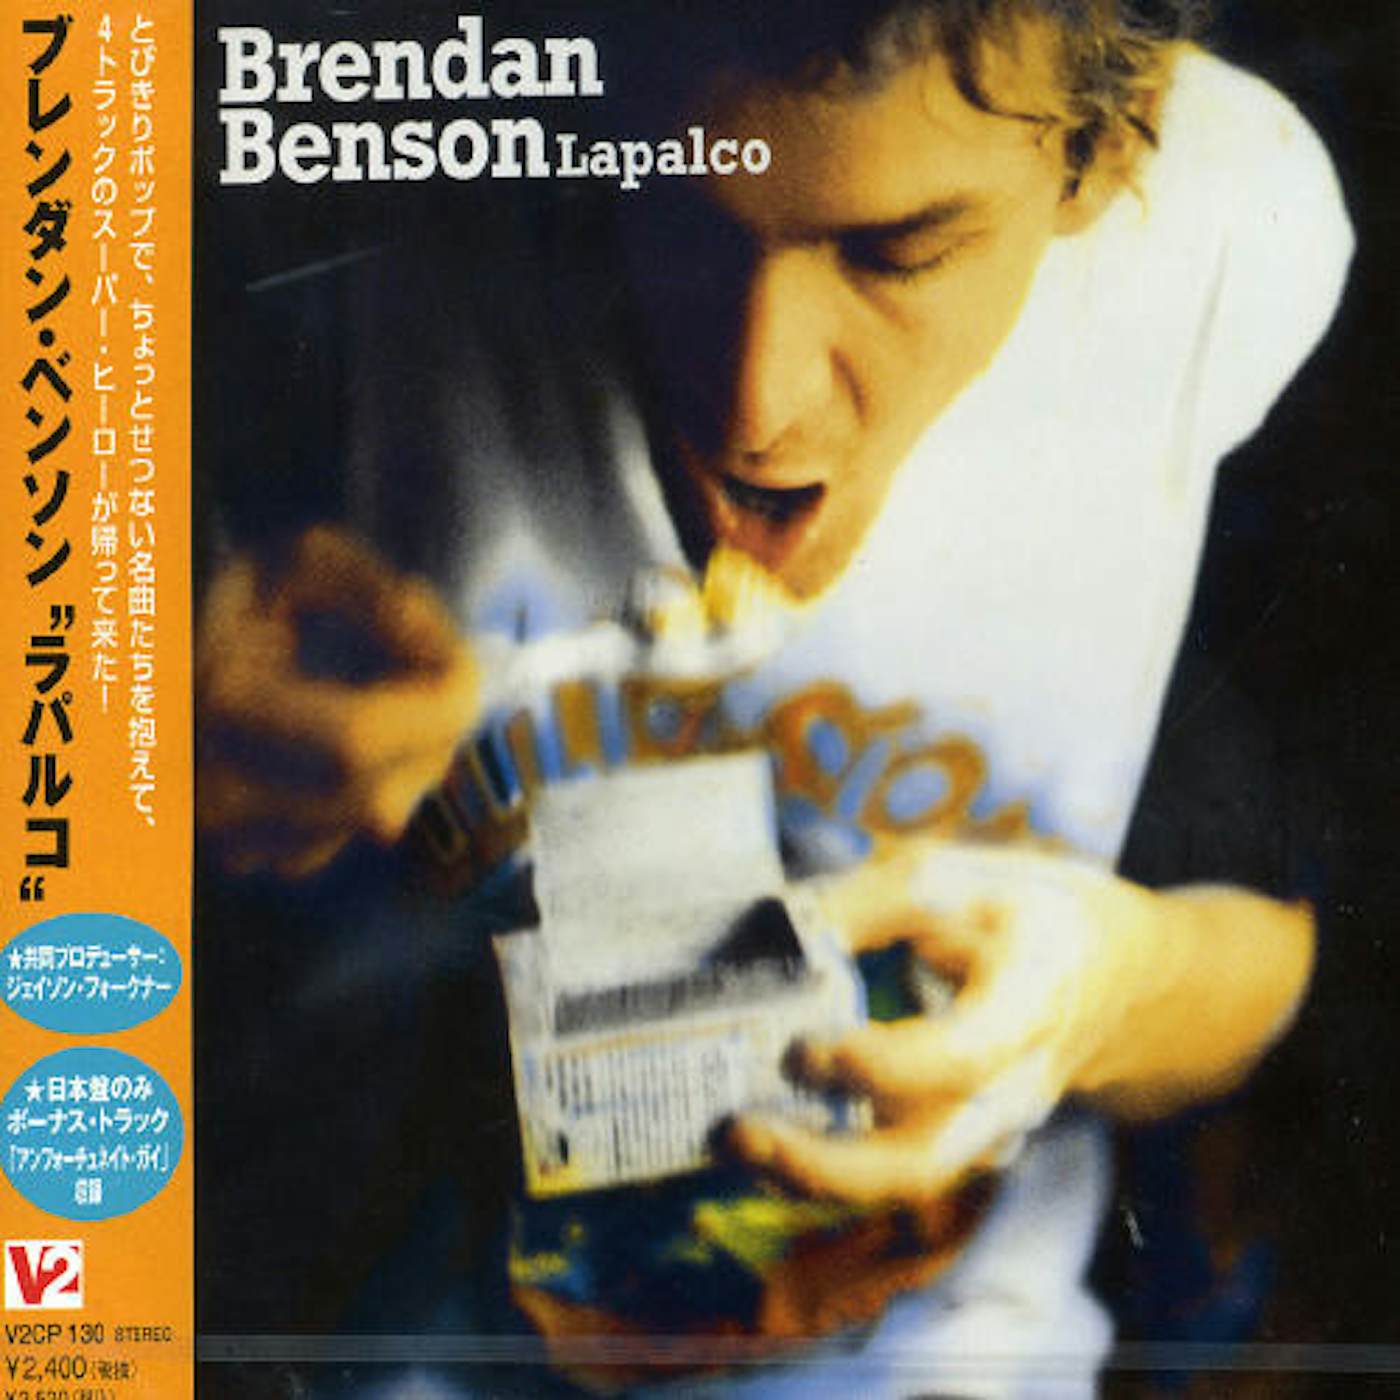 Brendan Benson LAPALCO CD